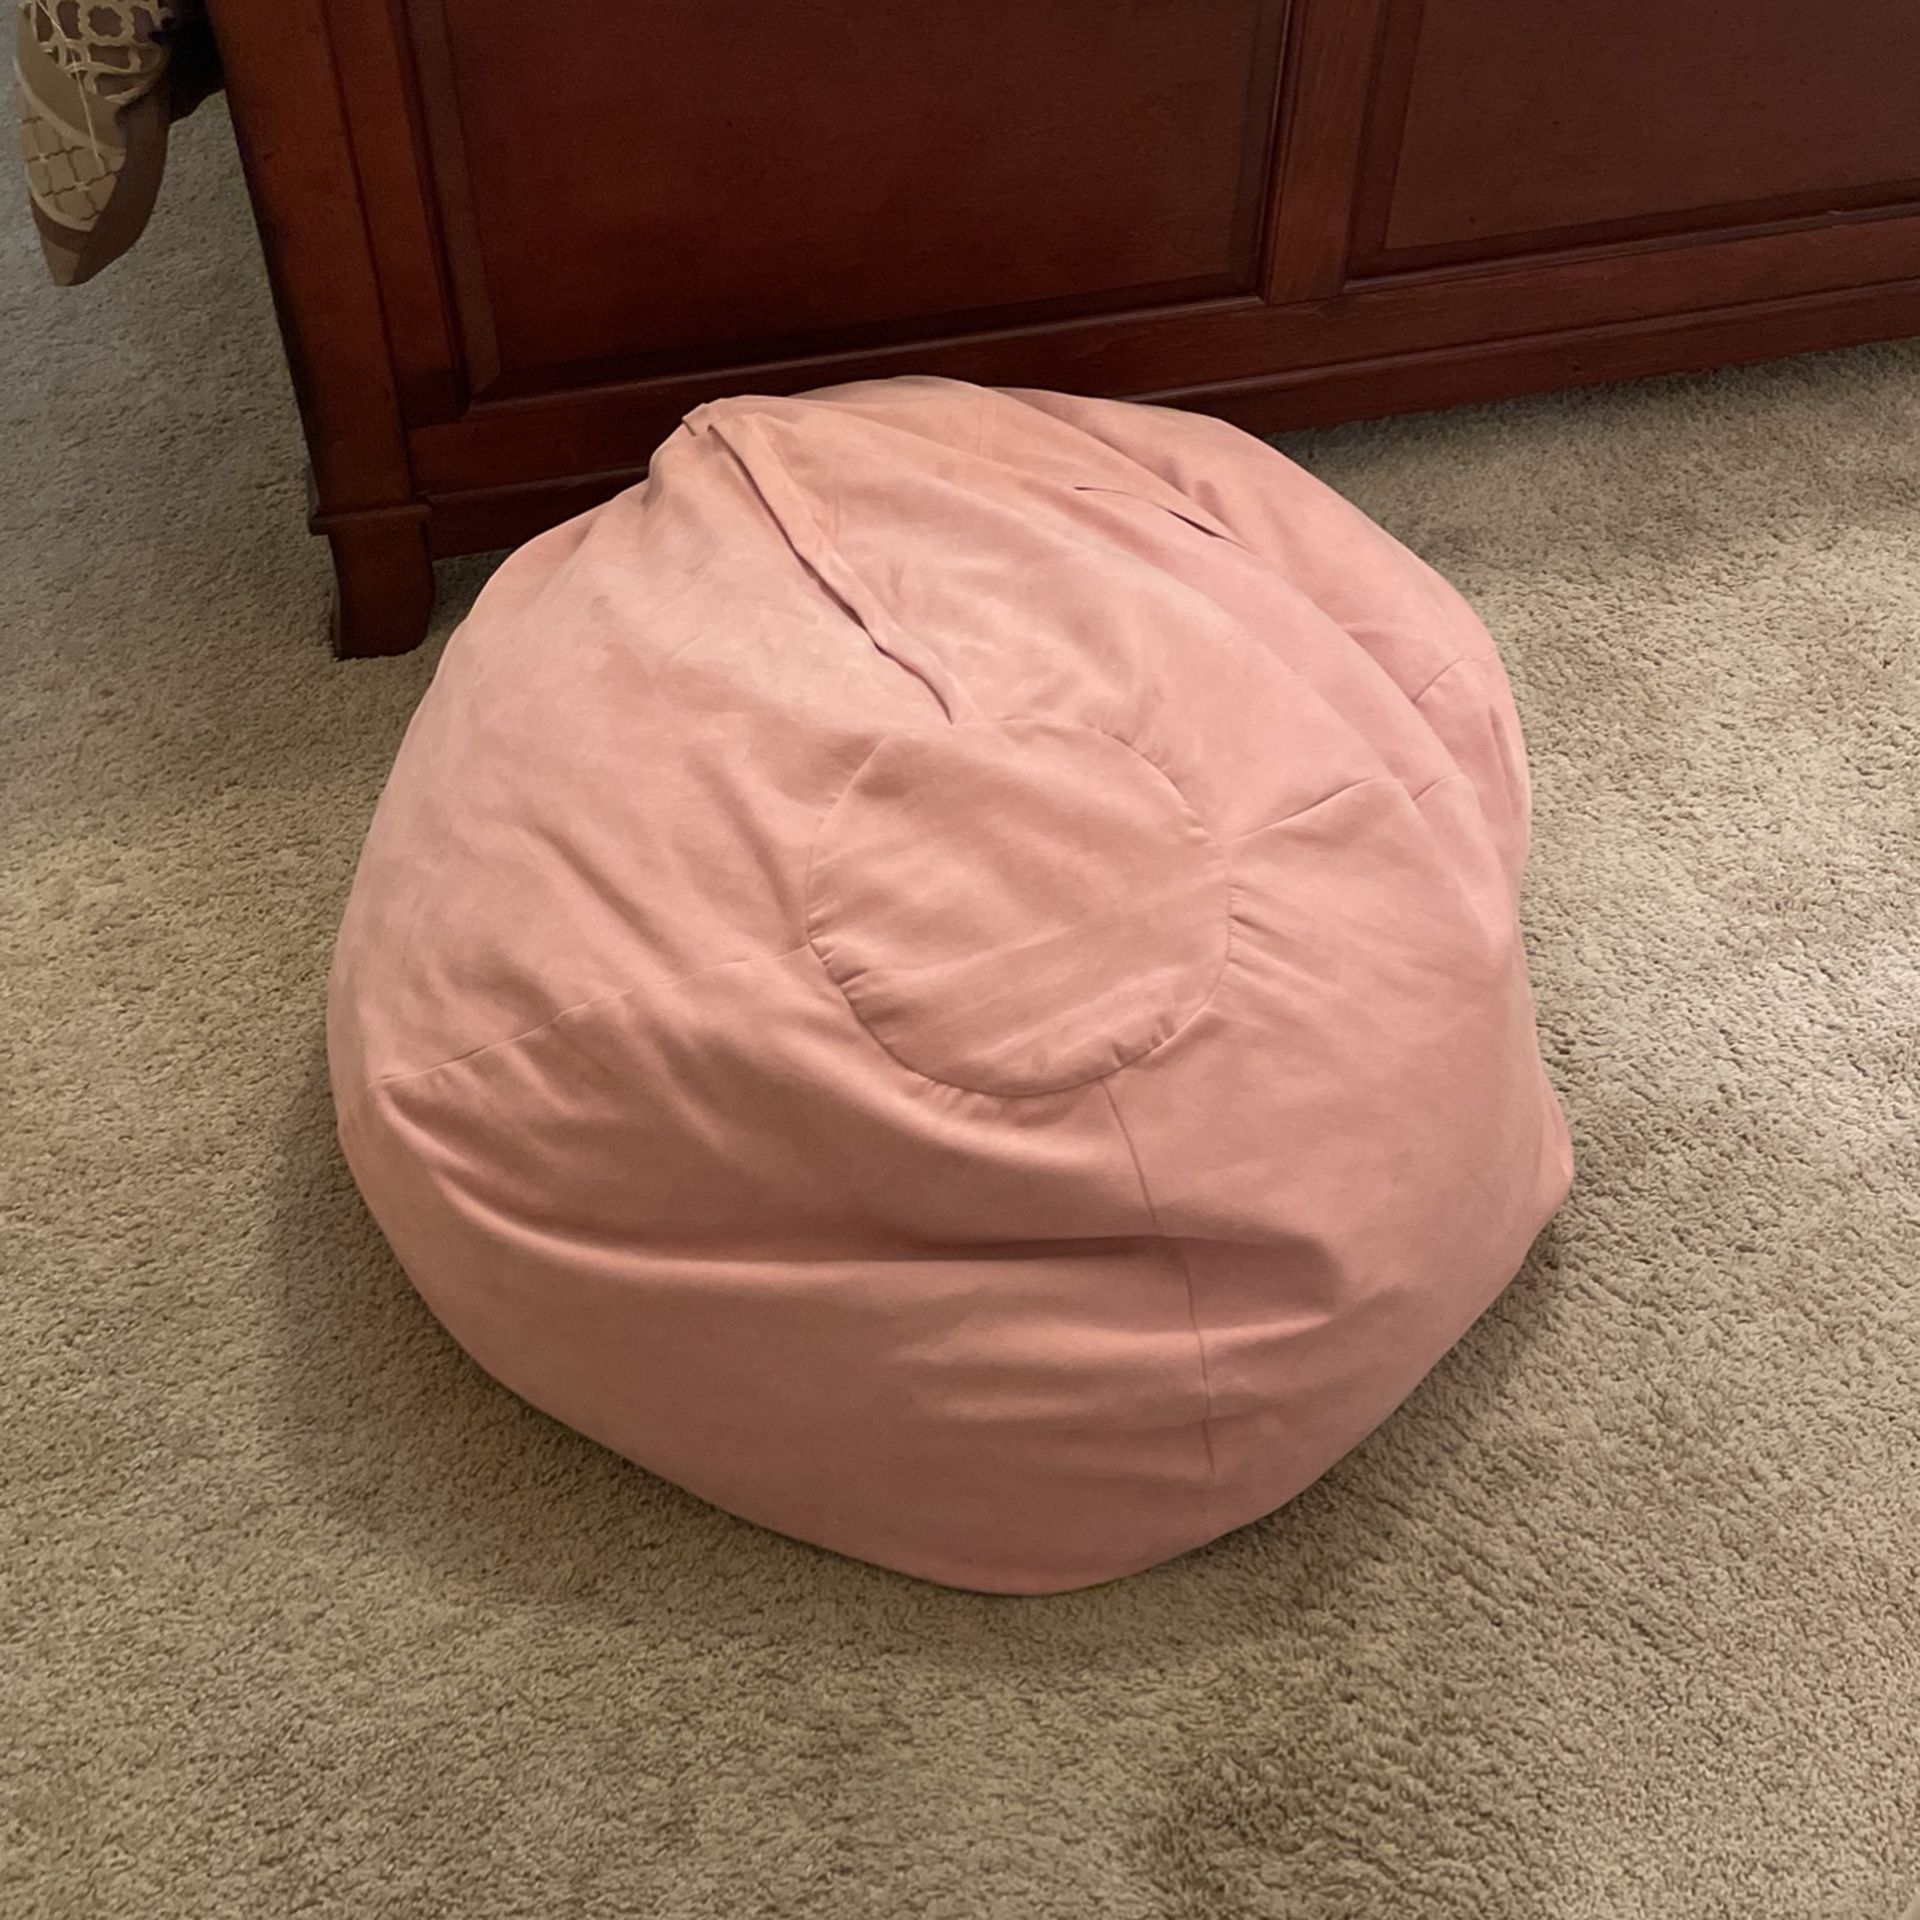 Pink Bean Bag